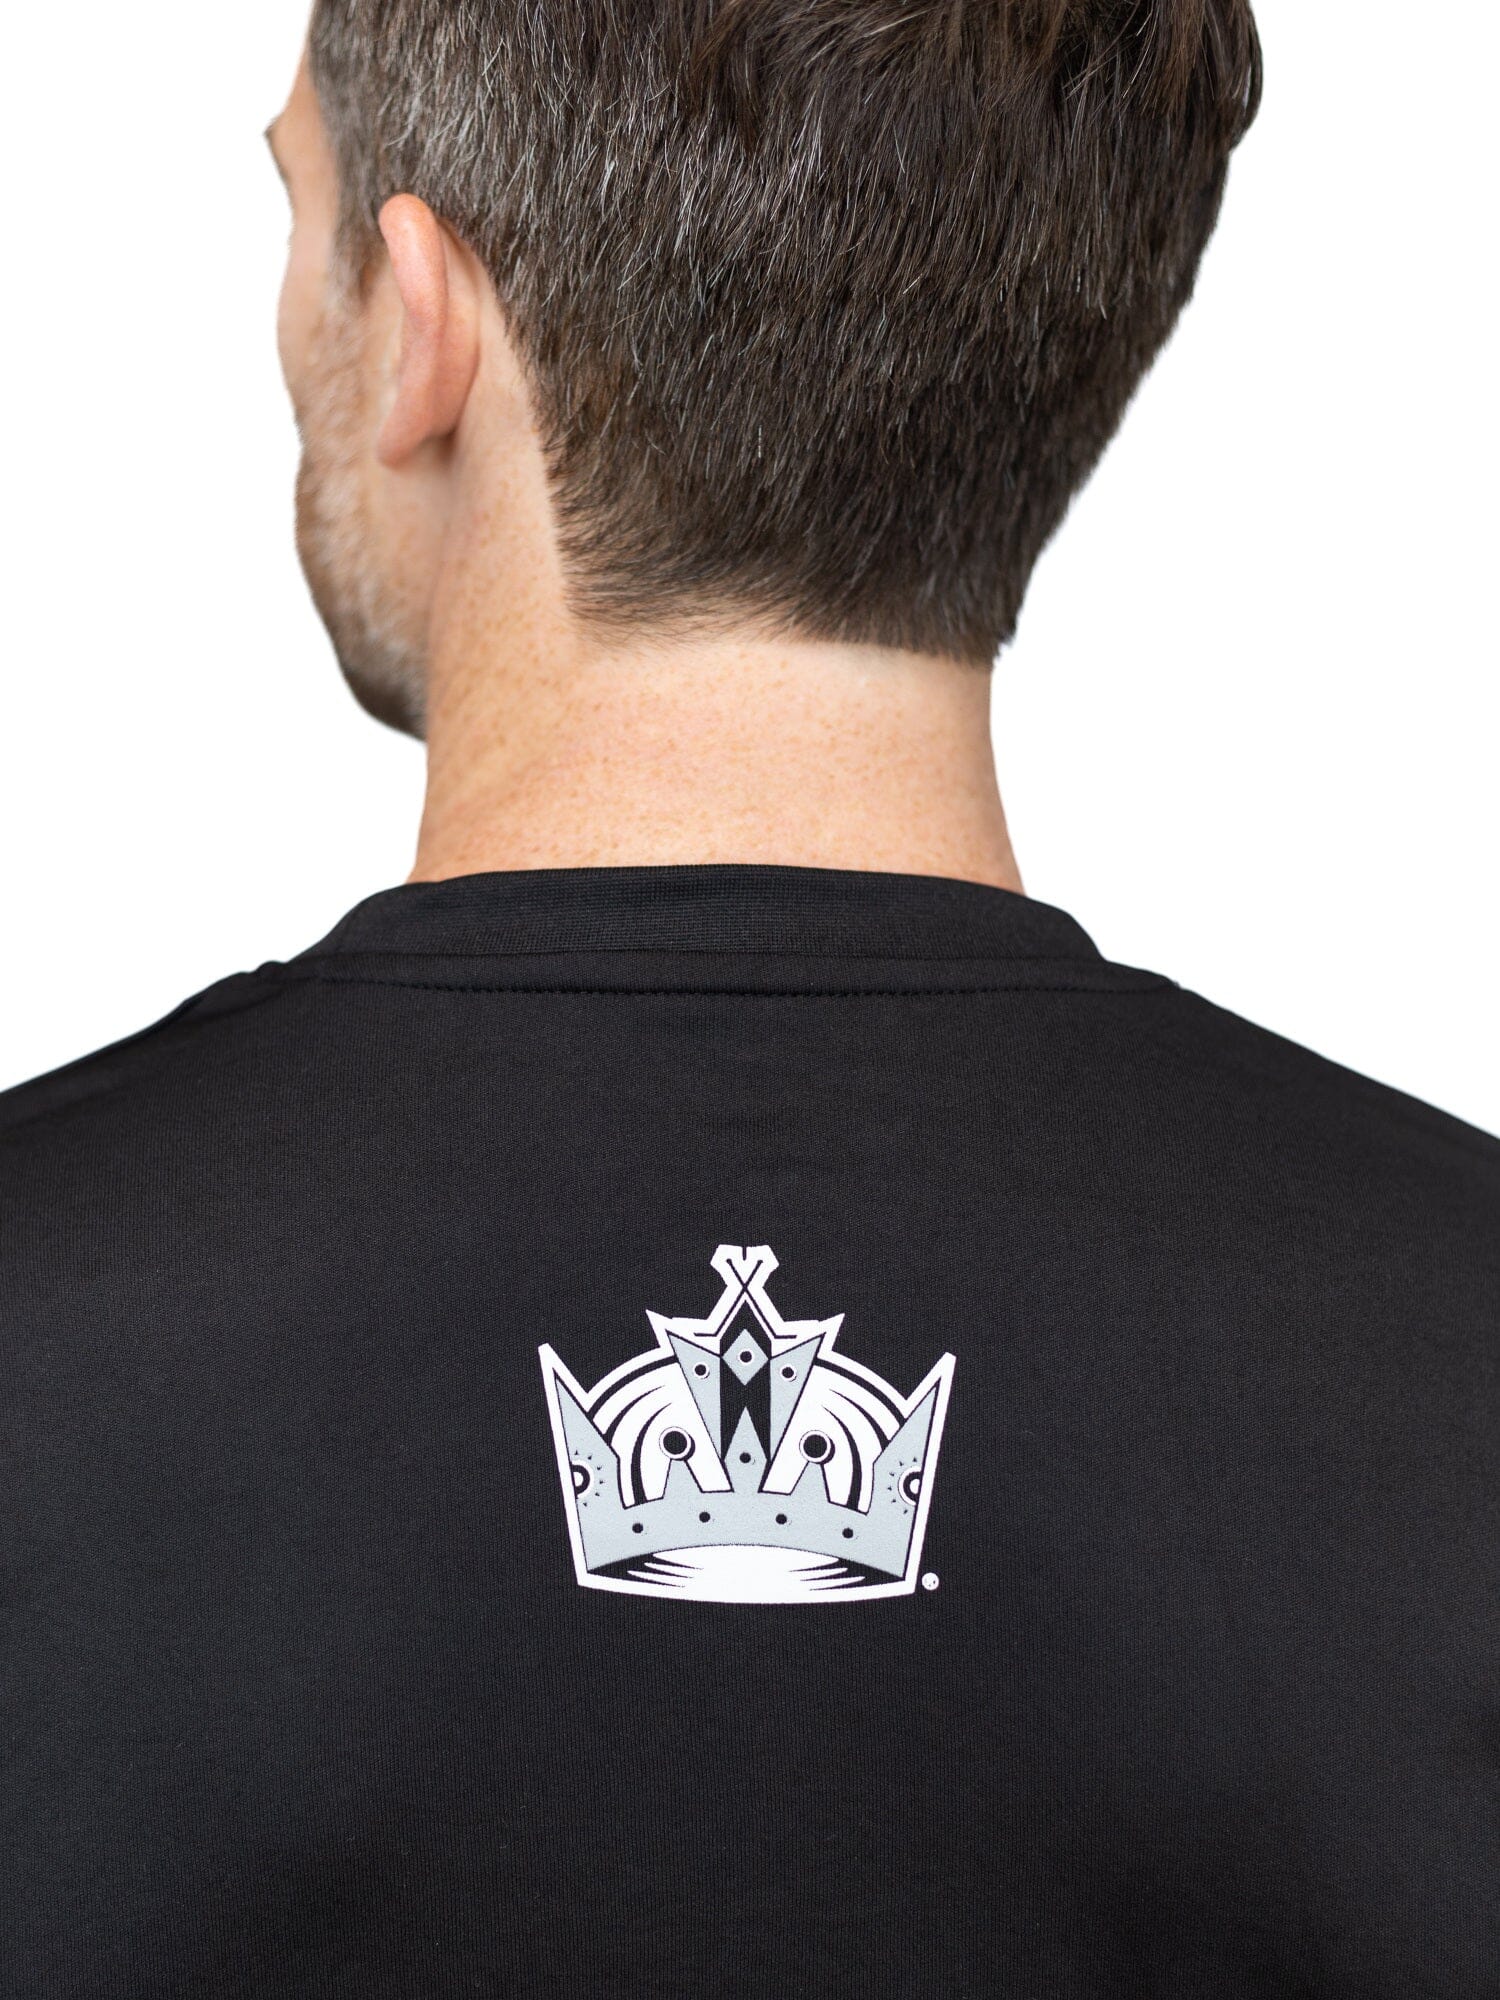 Los Angeles Kings "Full Fandom" Moisture Wicking T-Shirt - Back Logo